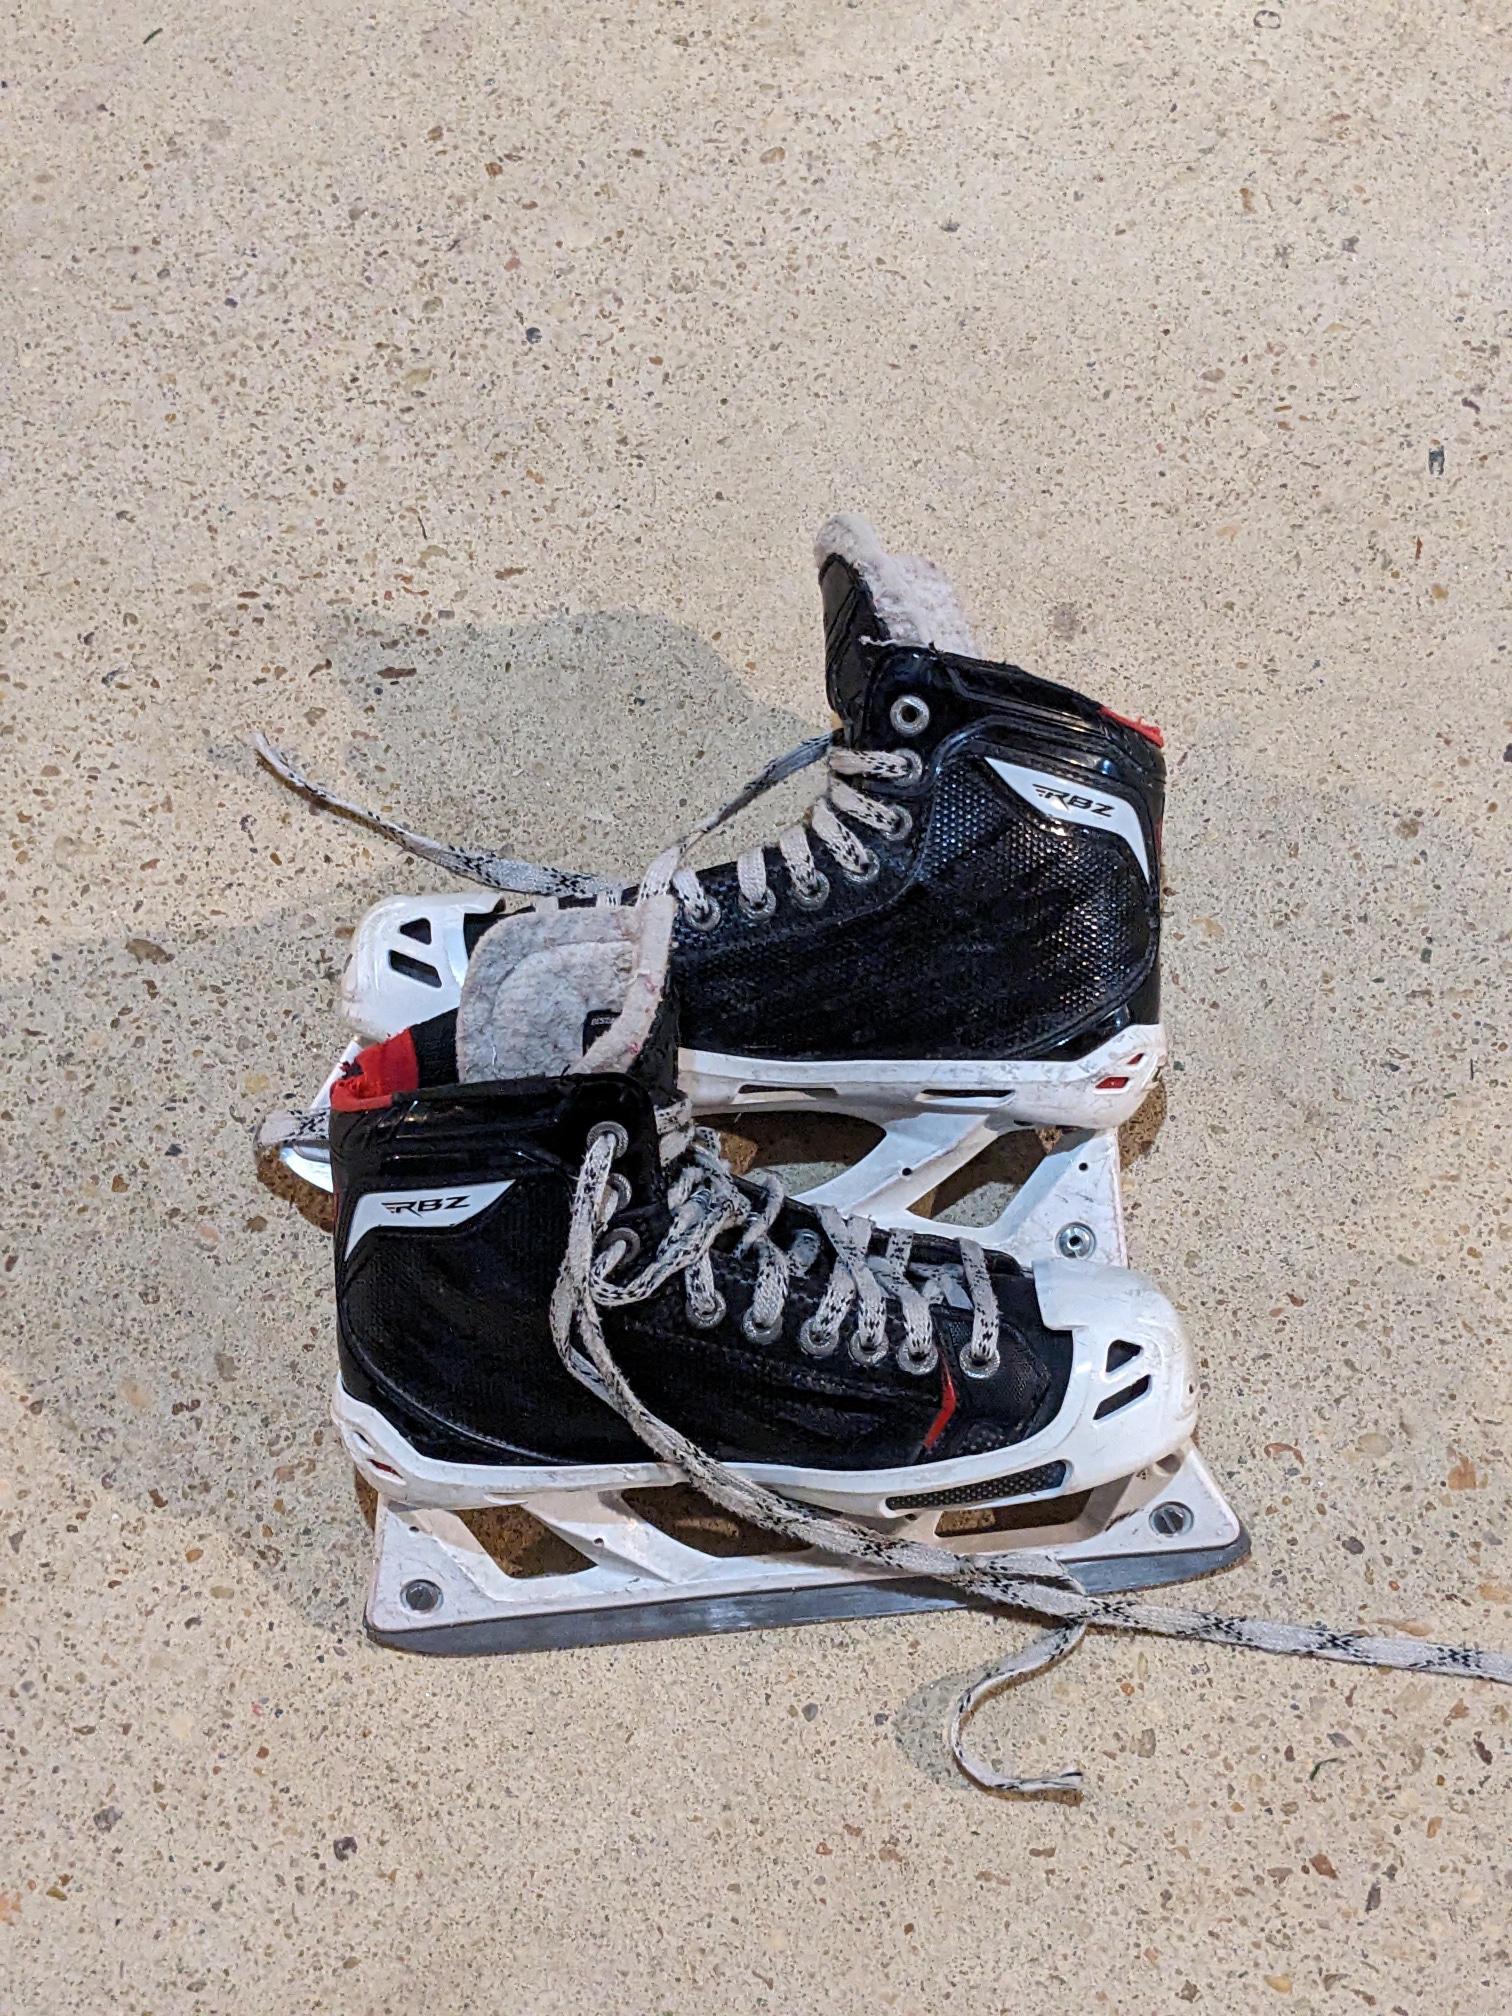 Junior Used CCM RBZ Hockey Goalie Skates Regular Width Size 4